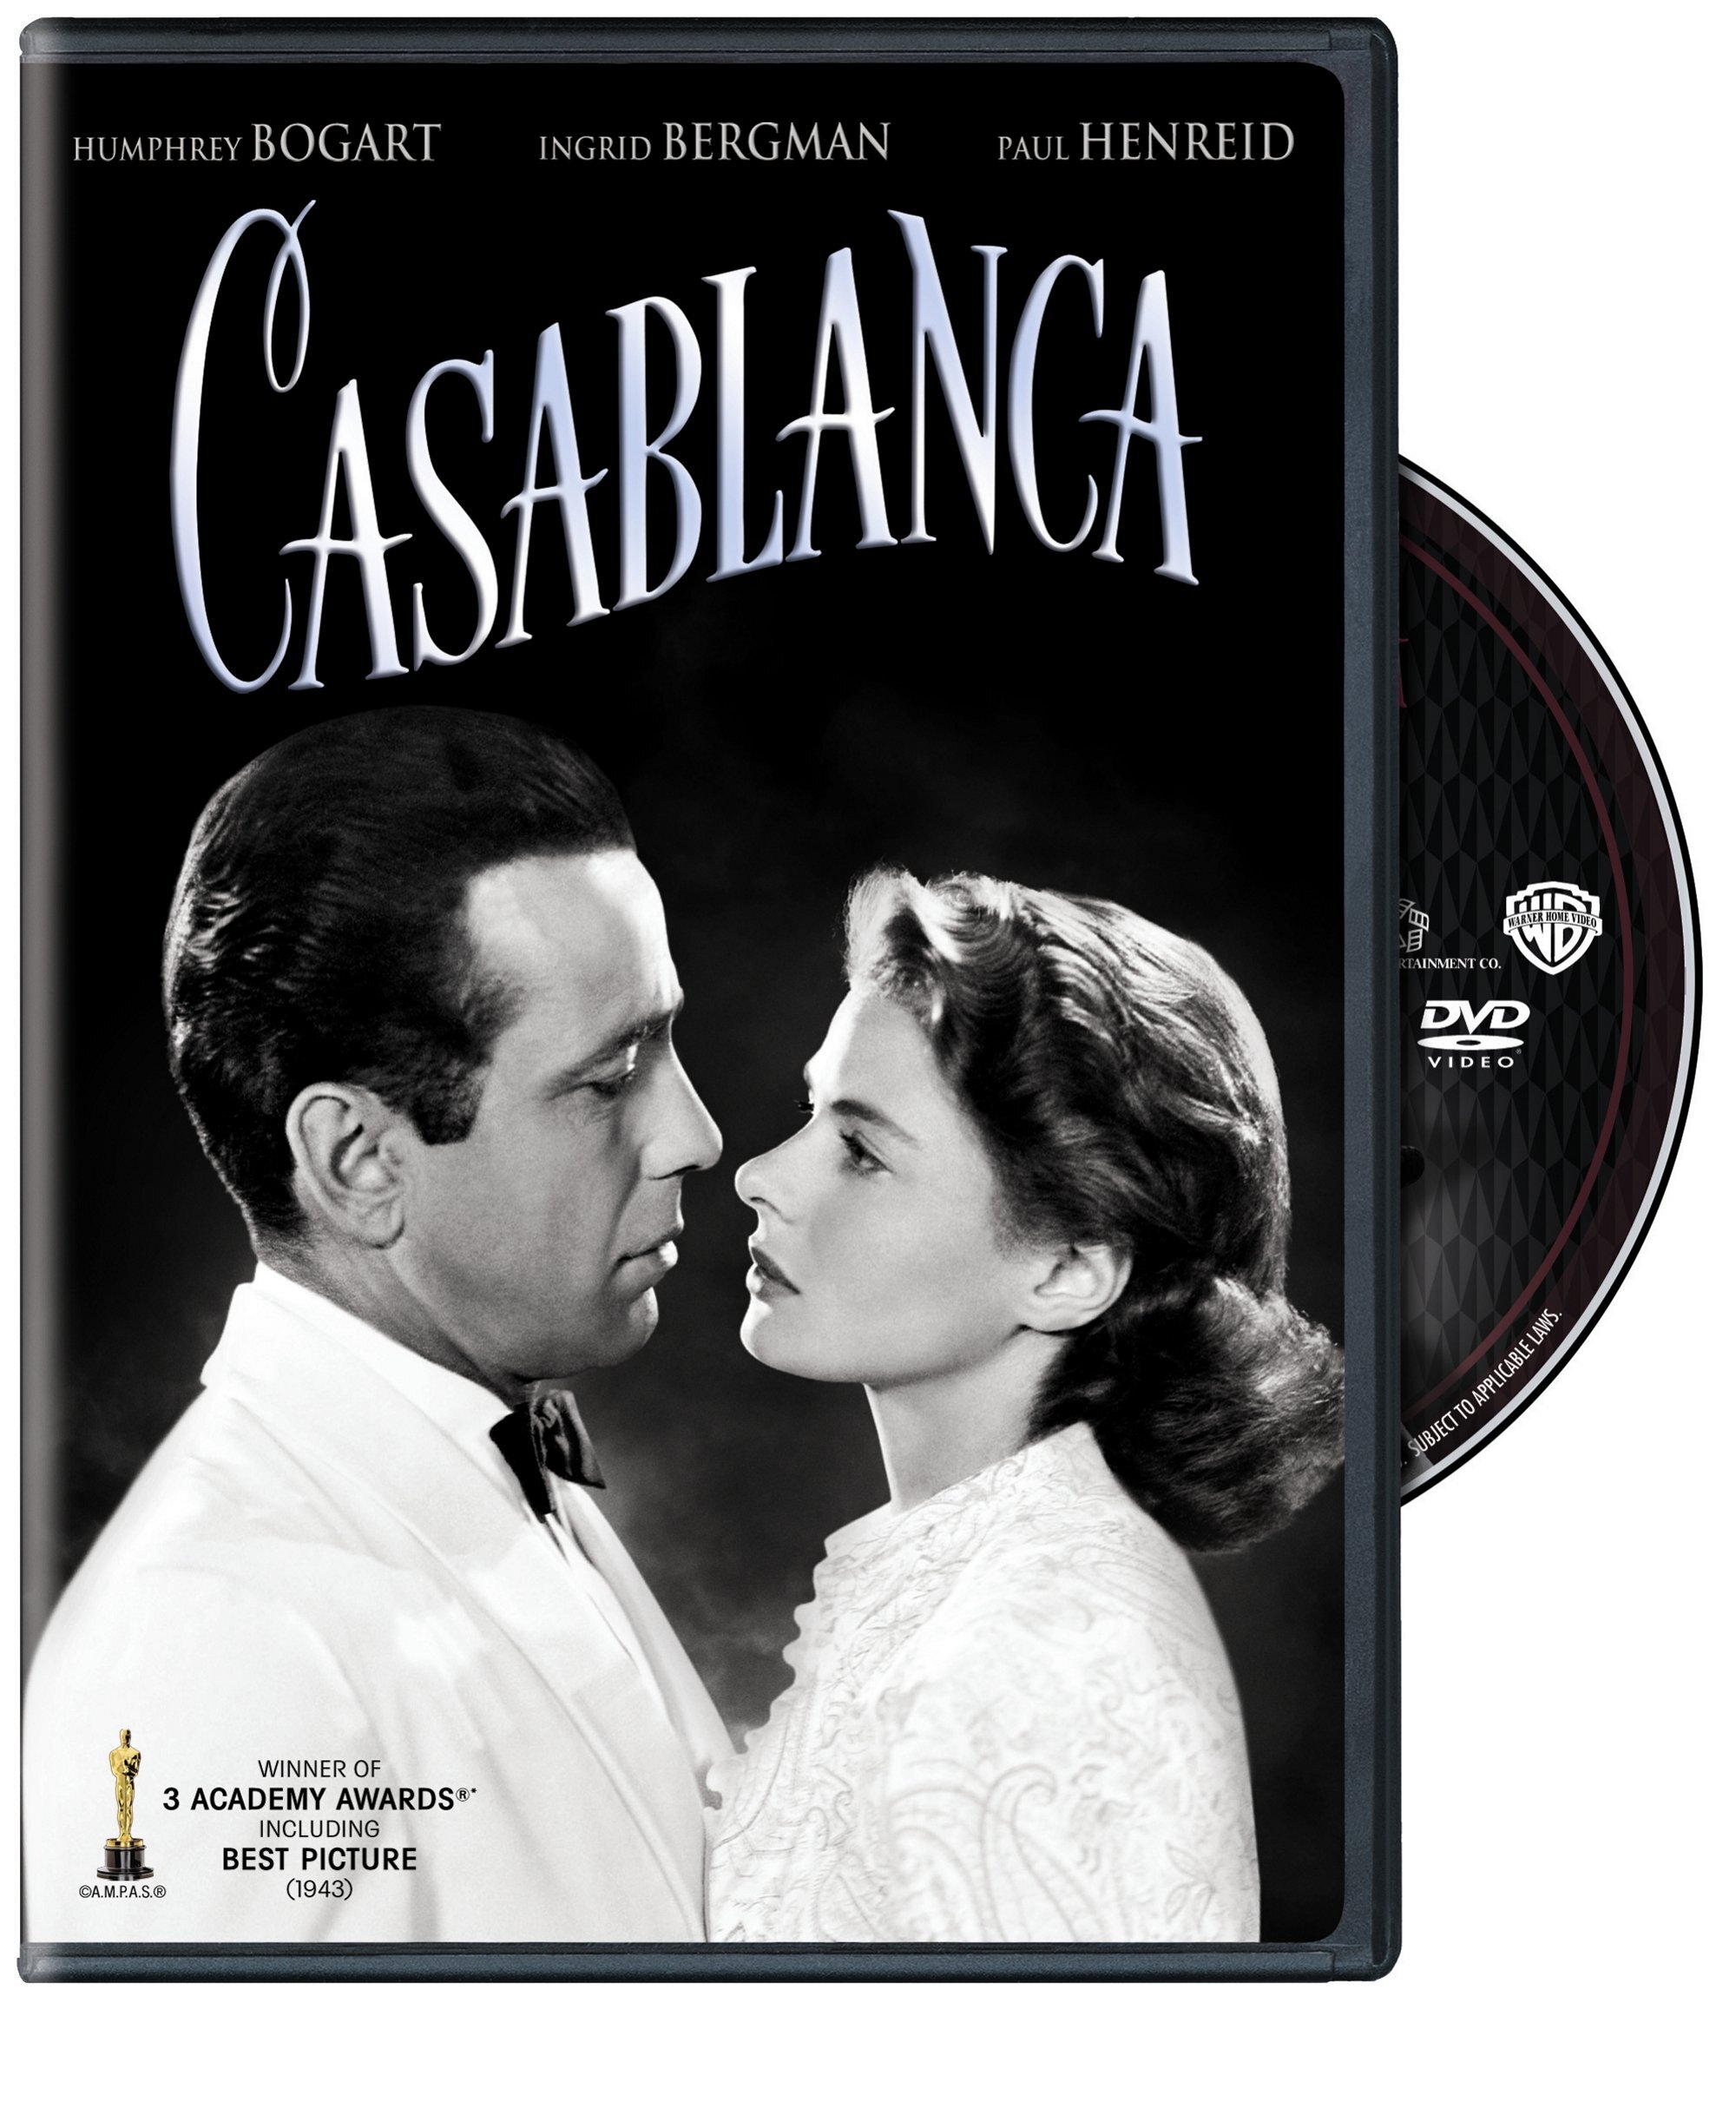 Casablanca (70th Anniversary Edition) - DVD [ 1942 ]  - Classic Movies On DVD - Movies On GRUV